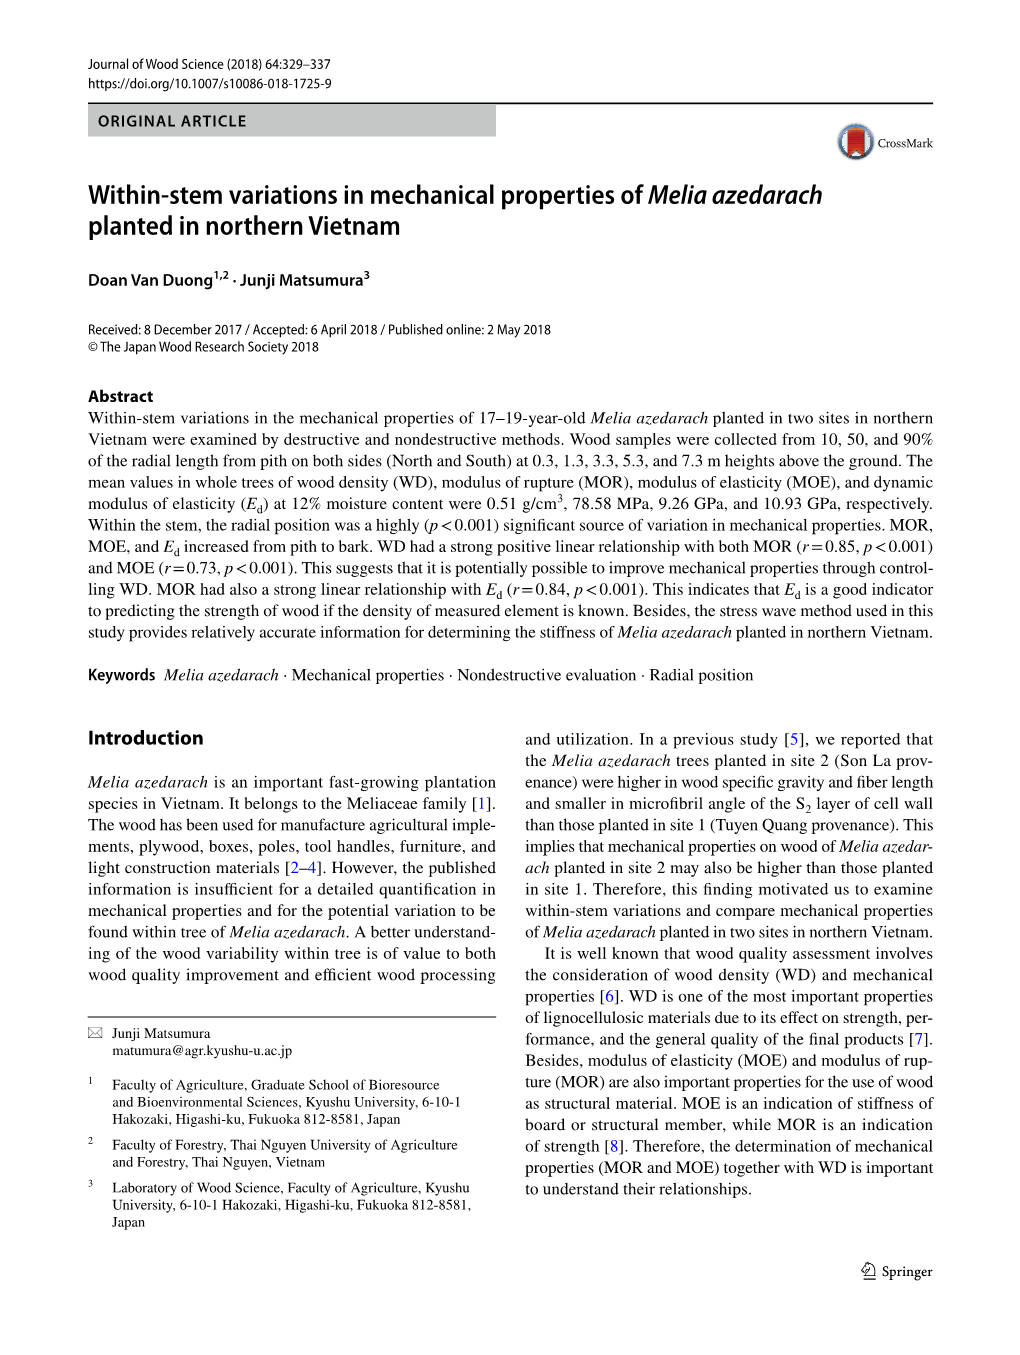 Within-Stem Variations in Mechanical Properties of Melia Azedarach Planted in Northern Vietnam